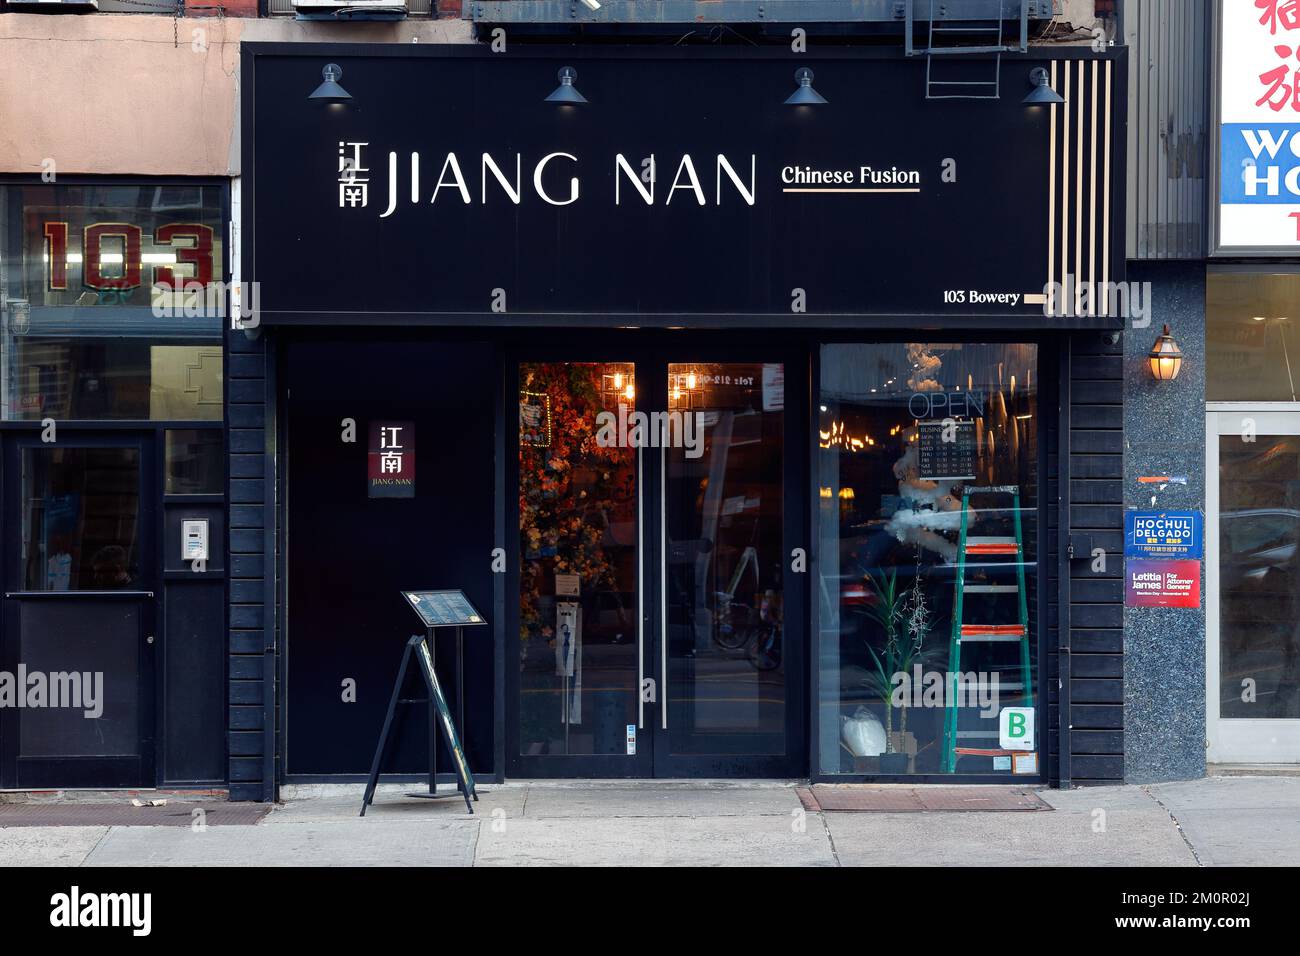 Jiang Nan 江南食府, 103 Bowery, New York, NYC storefront photo of a contemporary Chinese restaurant in Manhattan Chinatown. Stock Photo